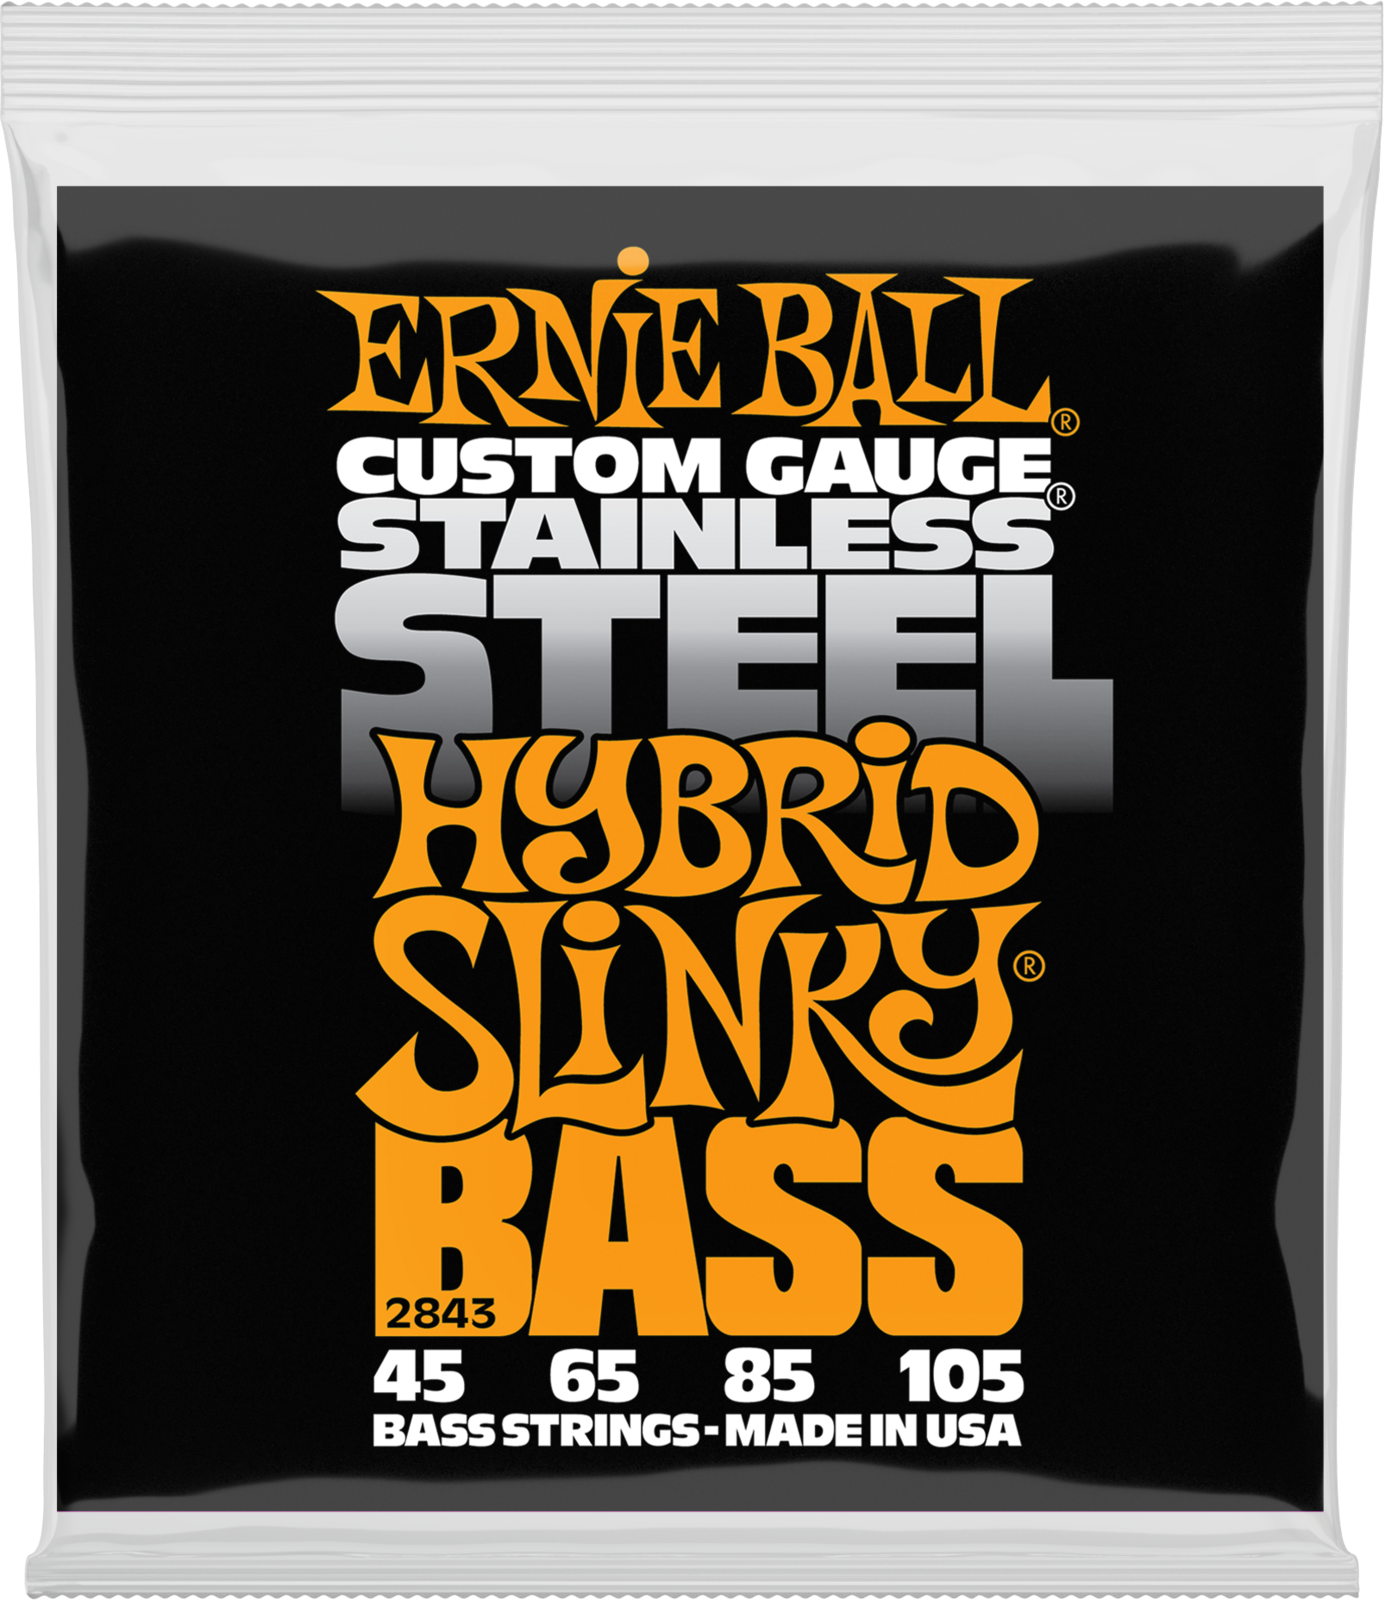 Bassguitar strings Ernie Ball 2843 Hybrid Slinky Bass